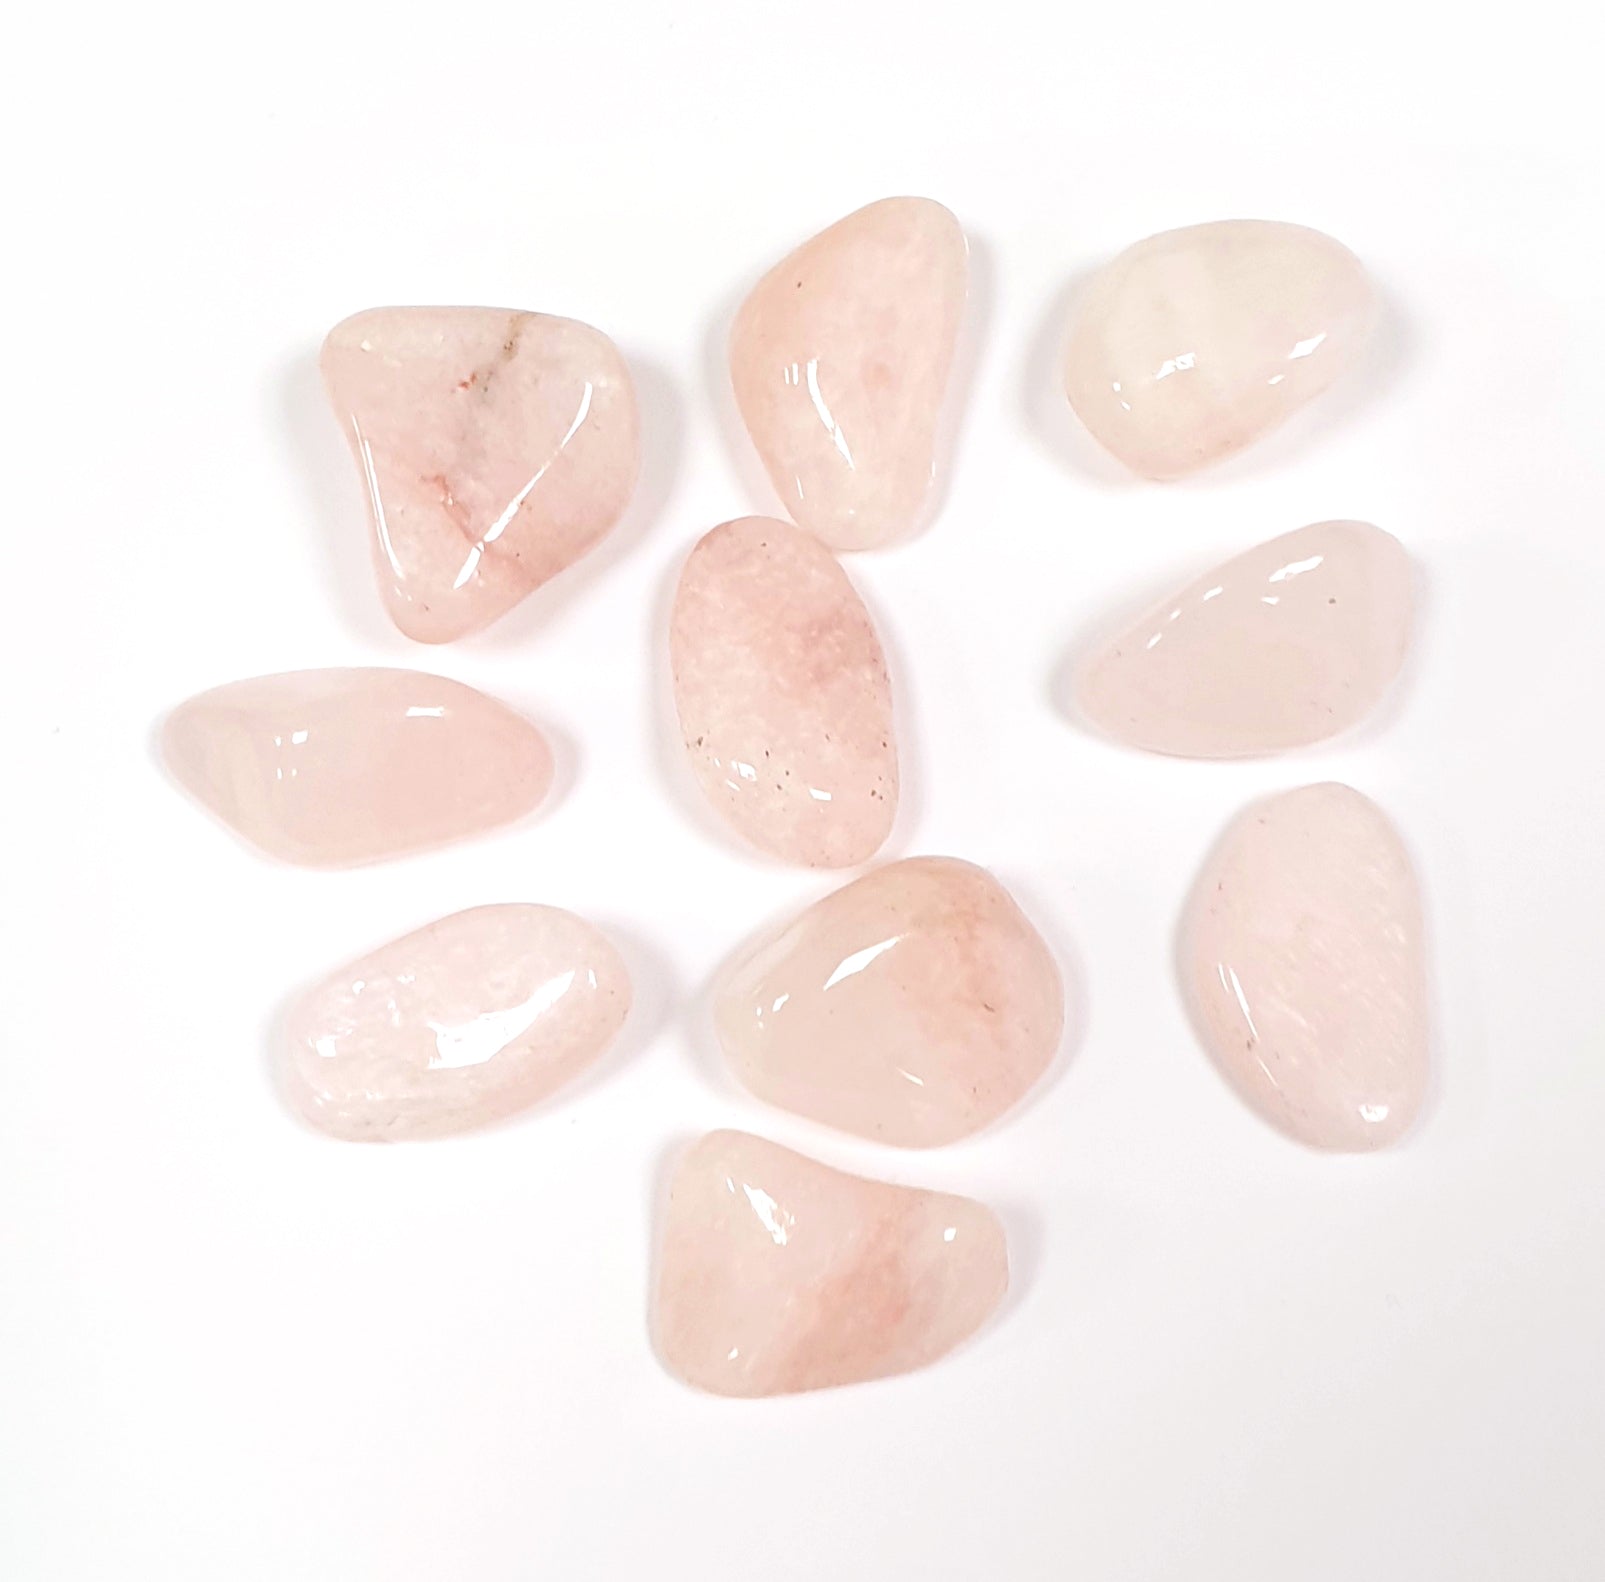 Petalite Healing Crystal Tumble Stone